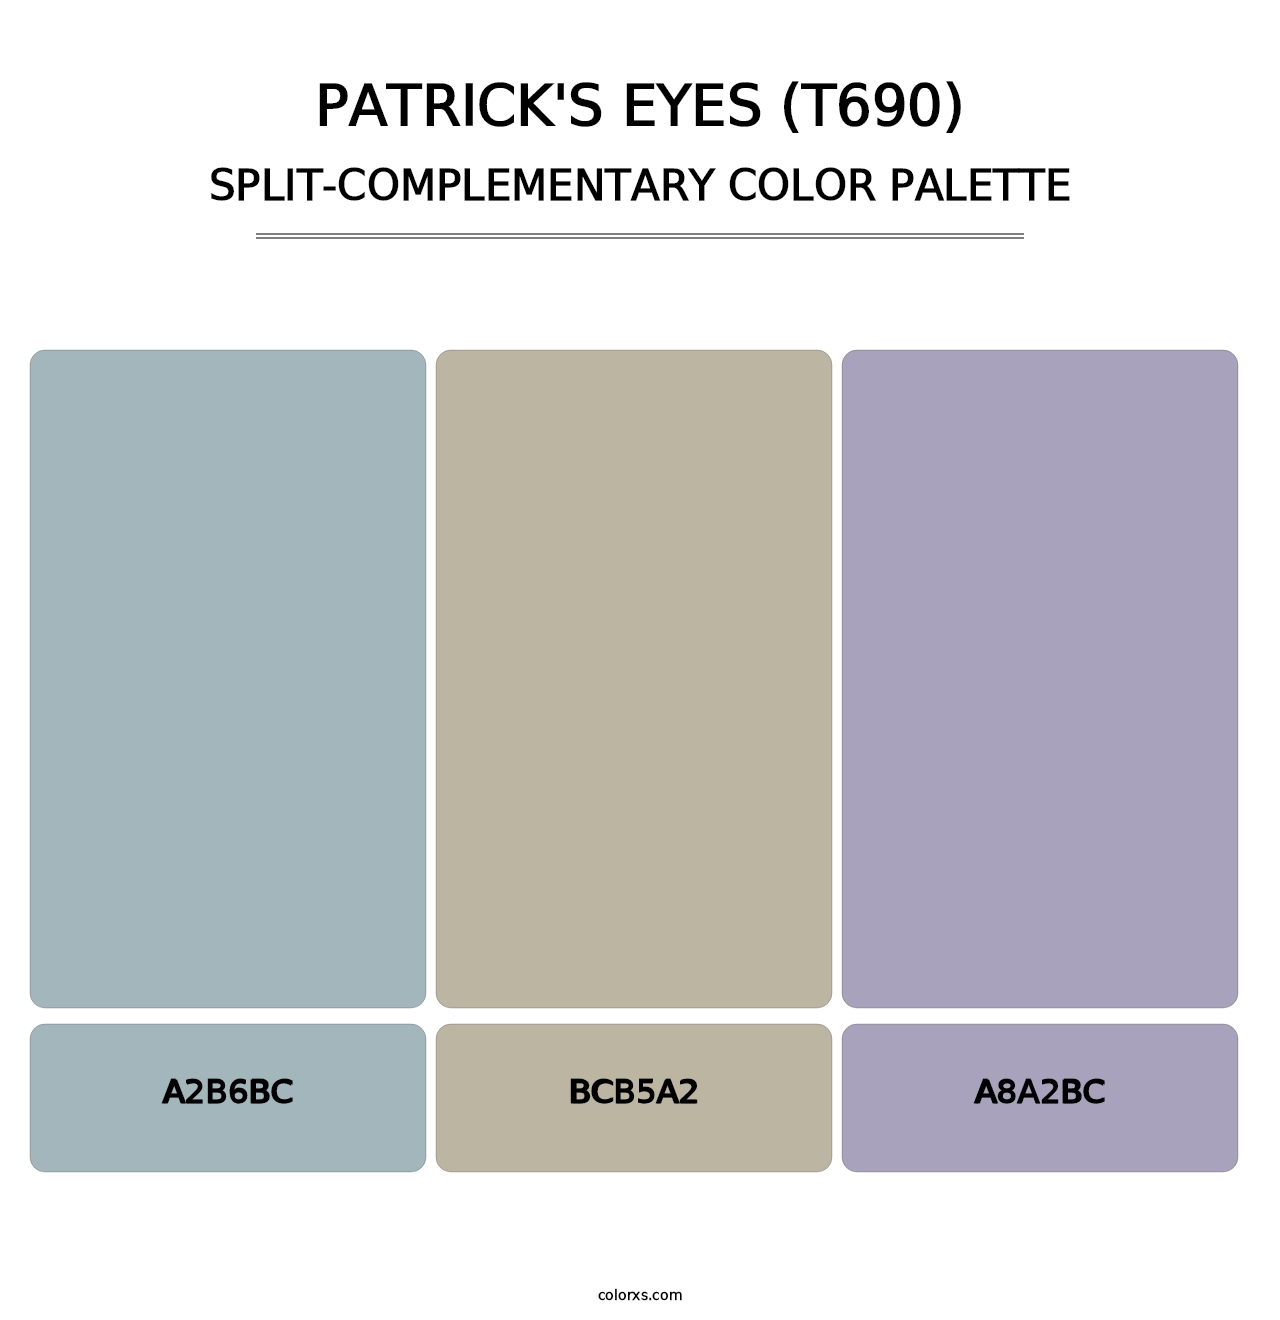 Patrick's Eyes (T690) - Split-Complementary Color Palette